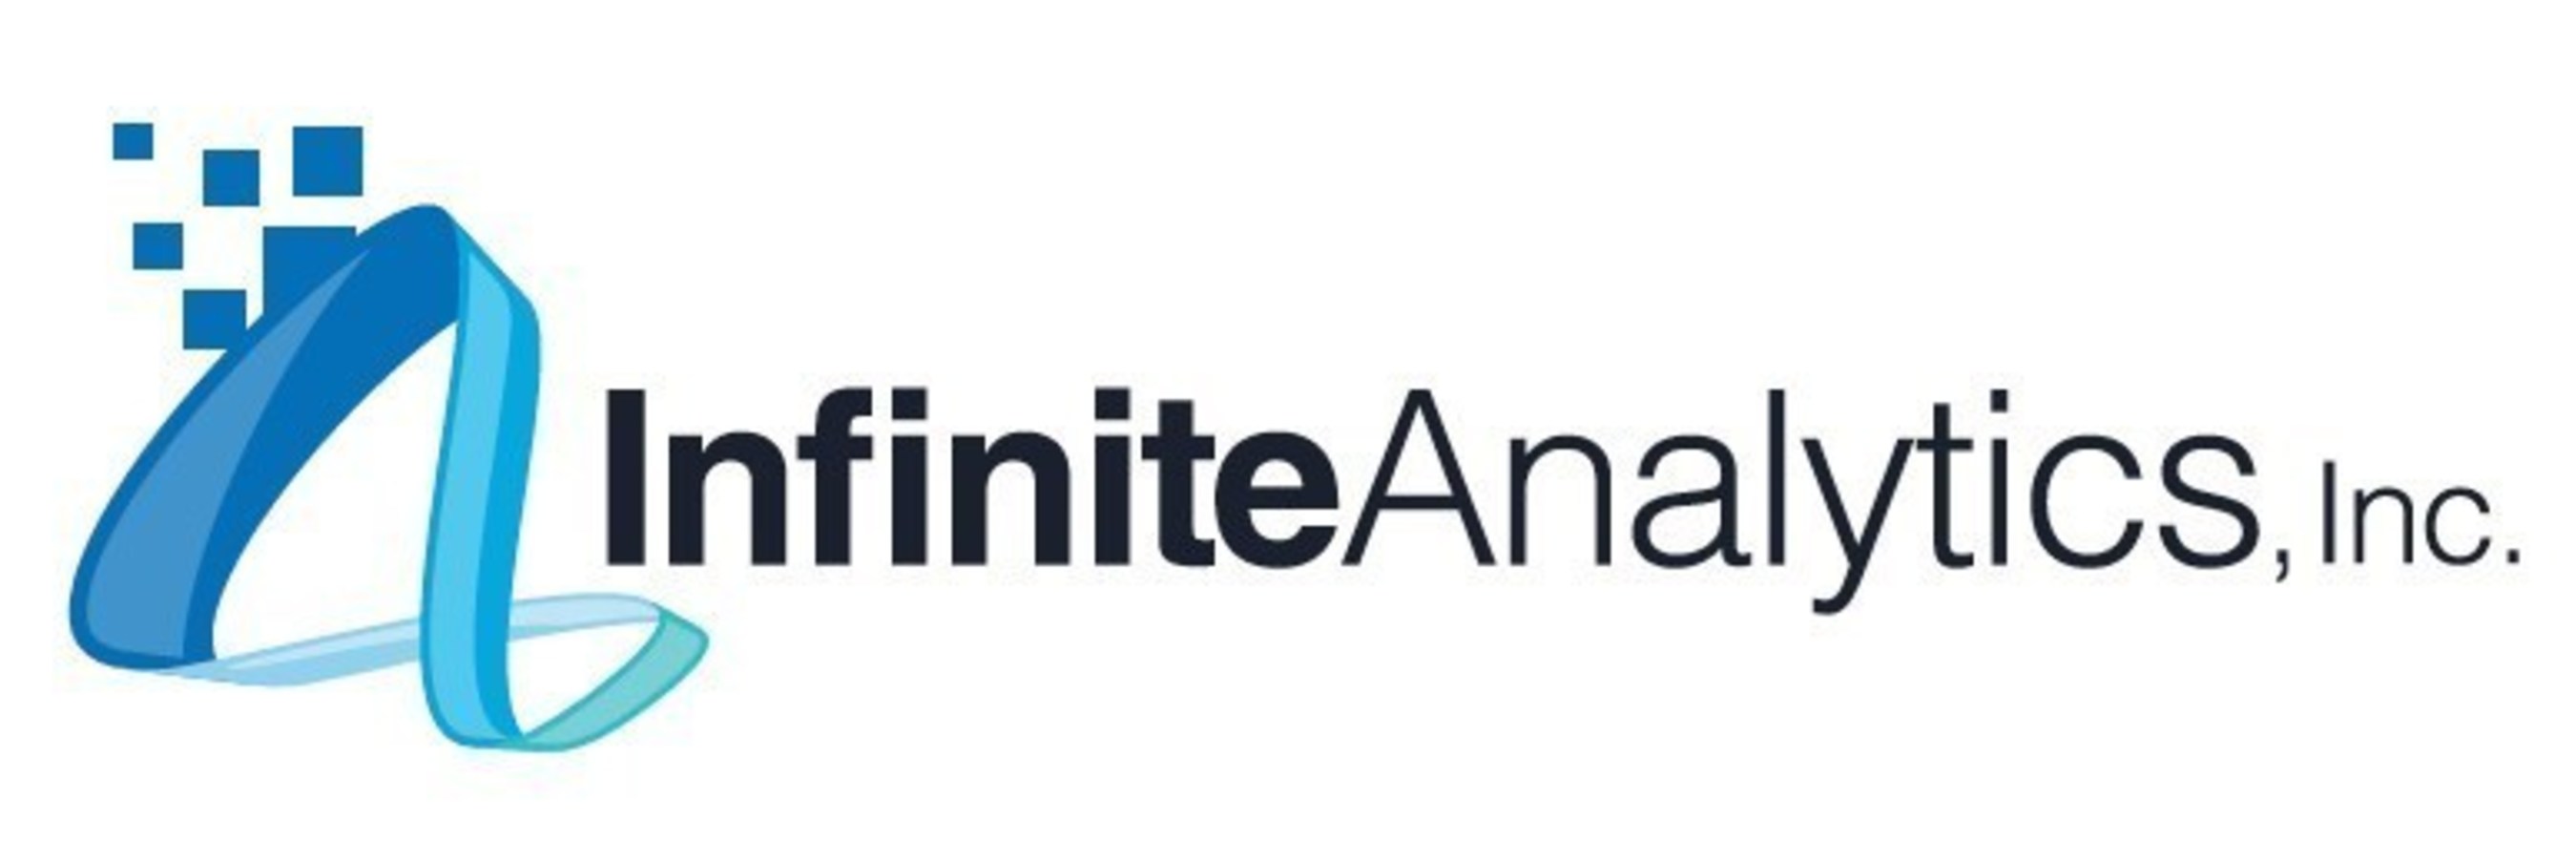 Infinite Analytics - eCommerce Personalized!